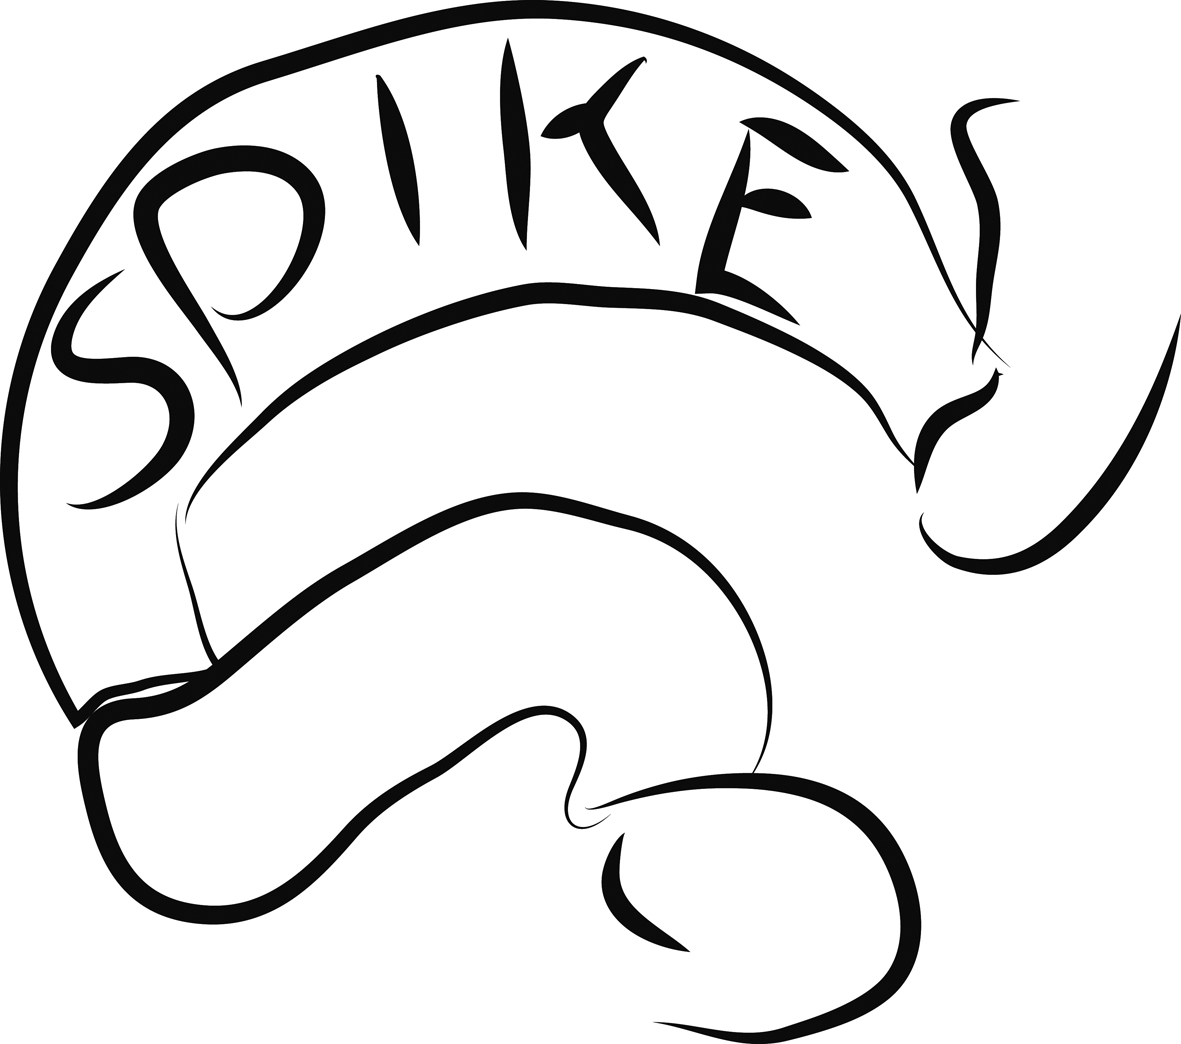 Spike Logo black small Kopie